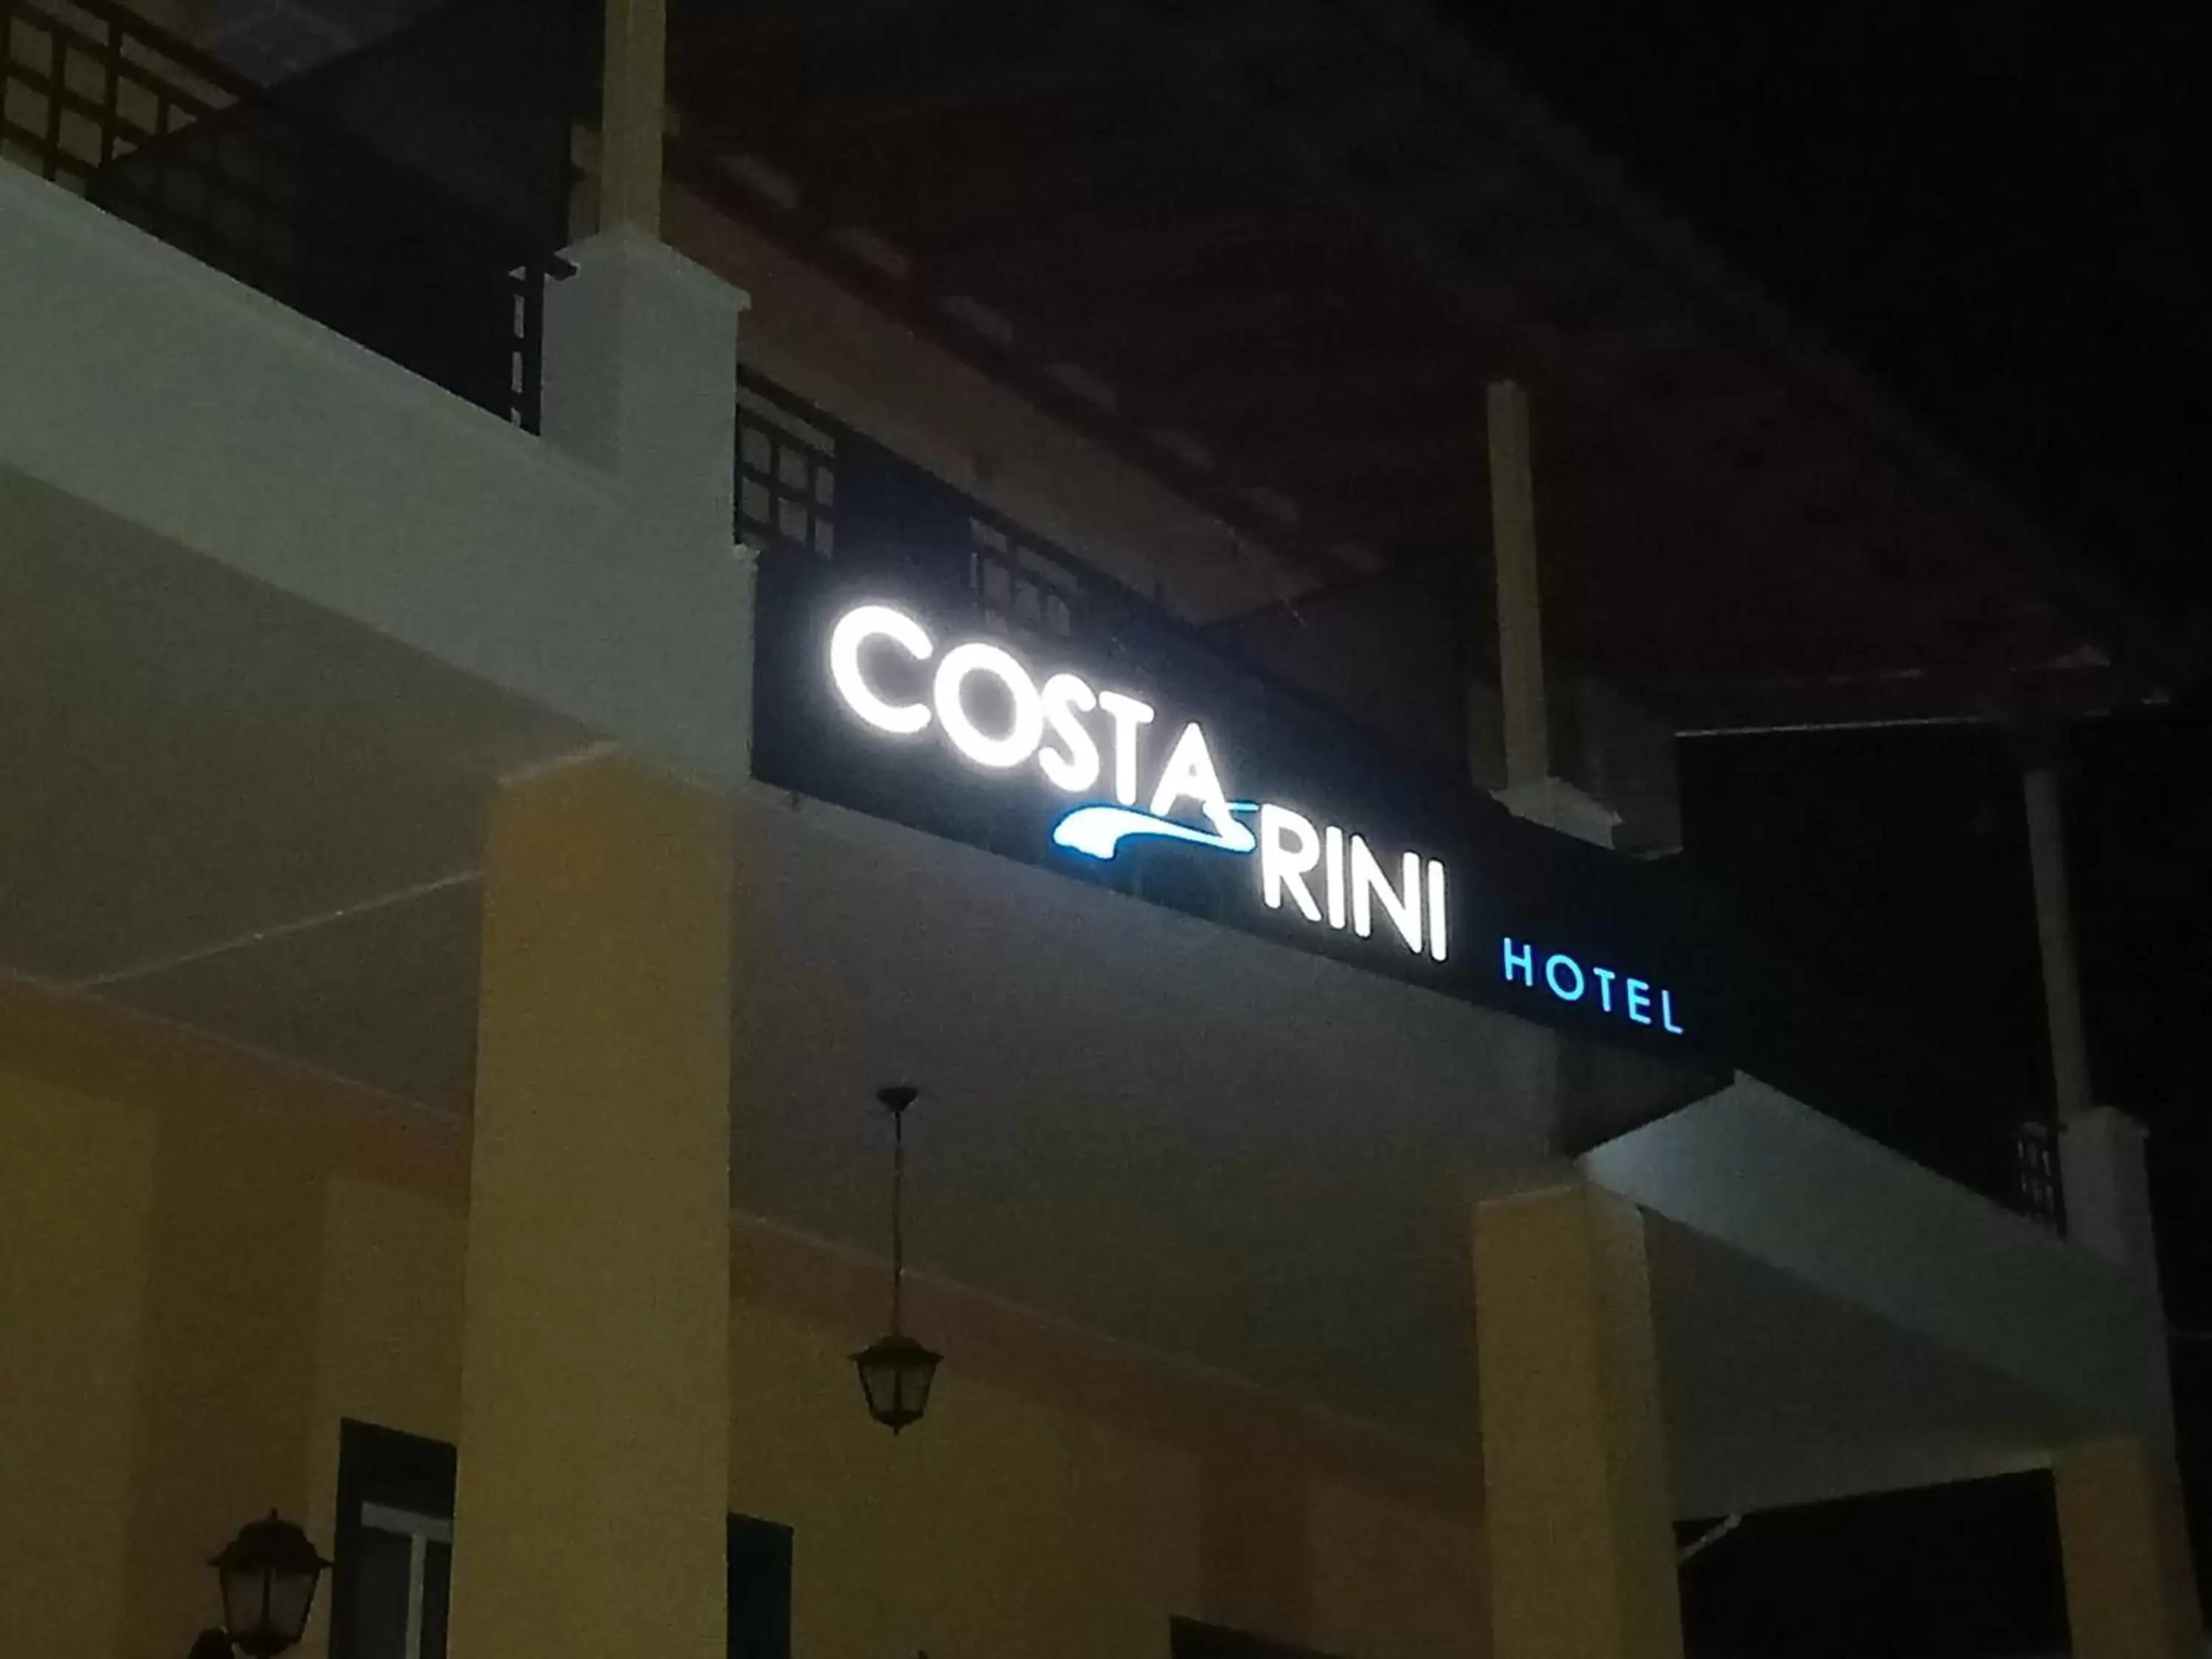 Costa-Rini Hotel